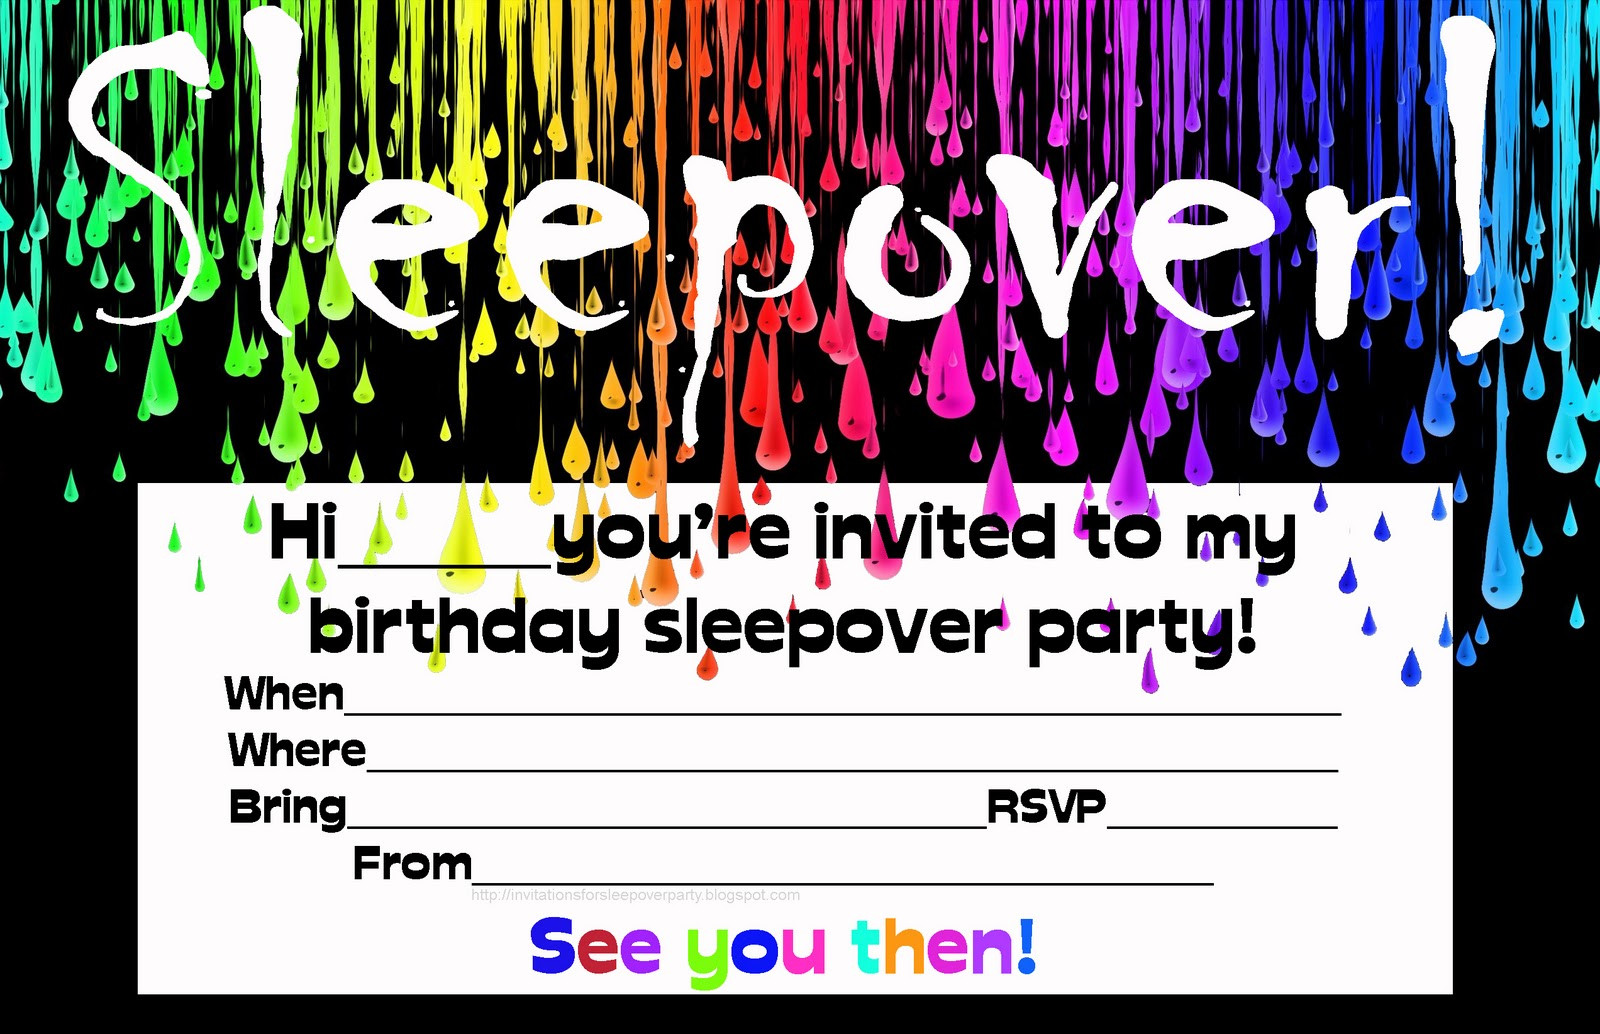 Boy Birthday Party Invitations
 INVITATIONS FOR SLEEPOVER PARTY